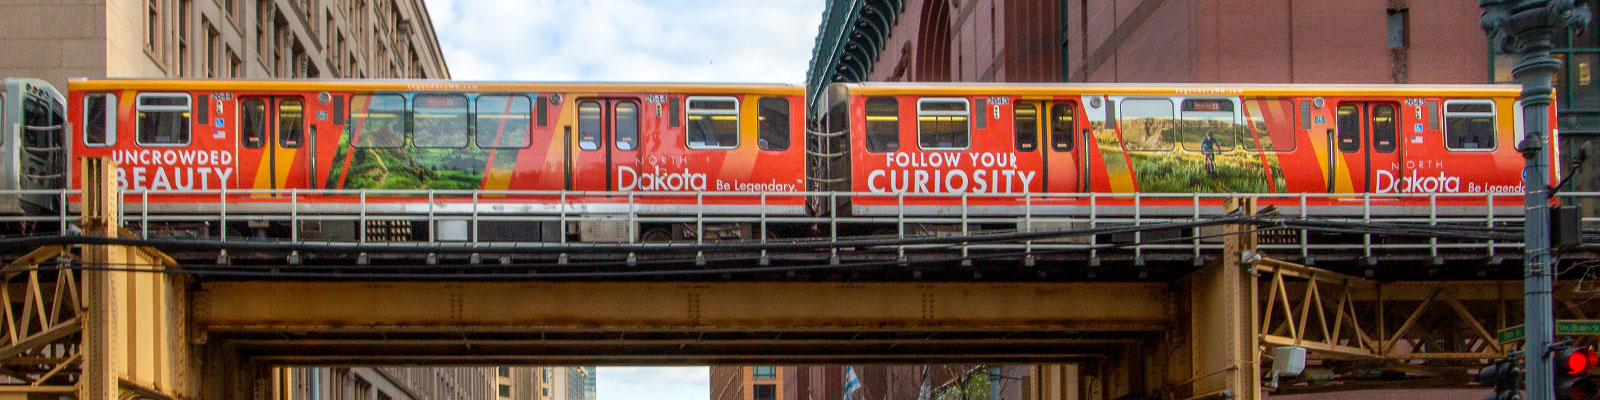 Train with North Dakota Tourism wrap in Chicago